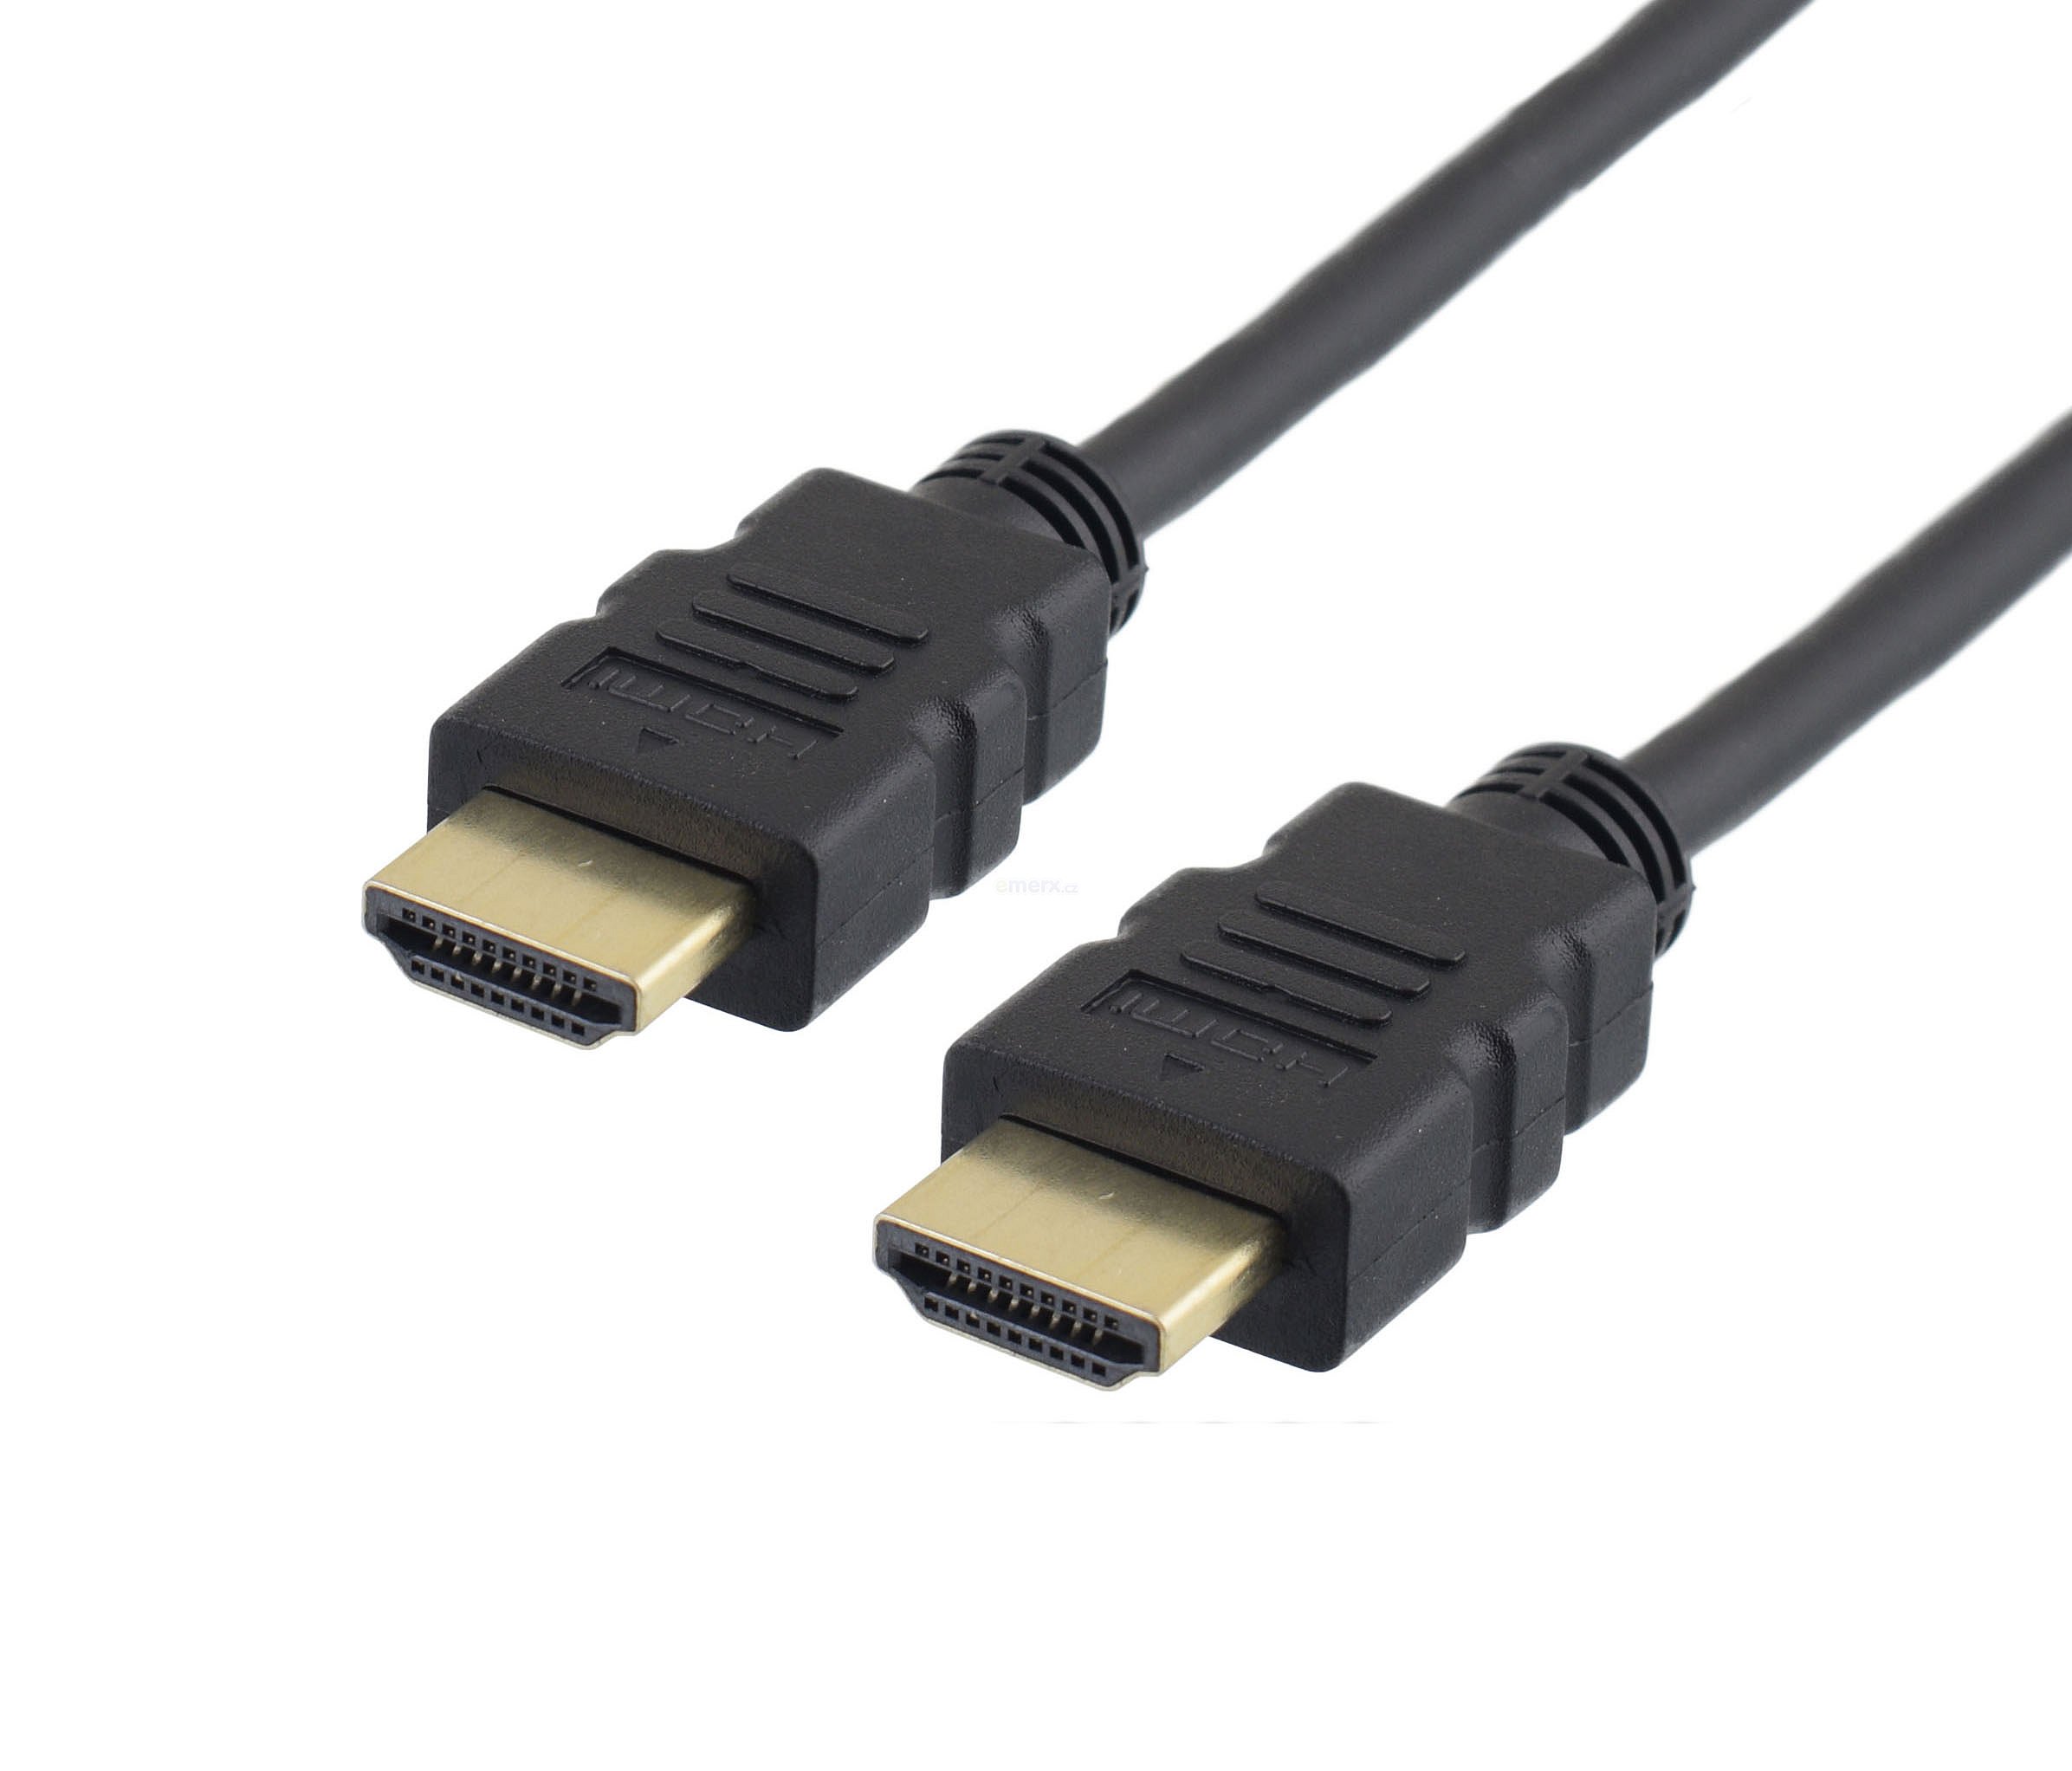 Propojovací kabel  HDMI 1.4 na HDMI 1.4, délka 2m (HS-101-2)